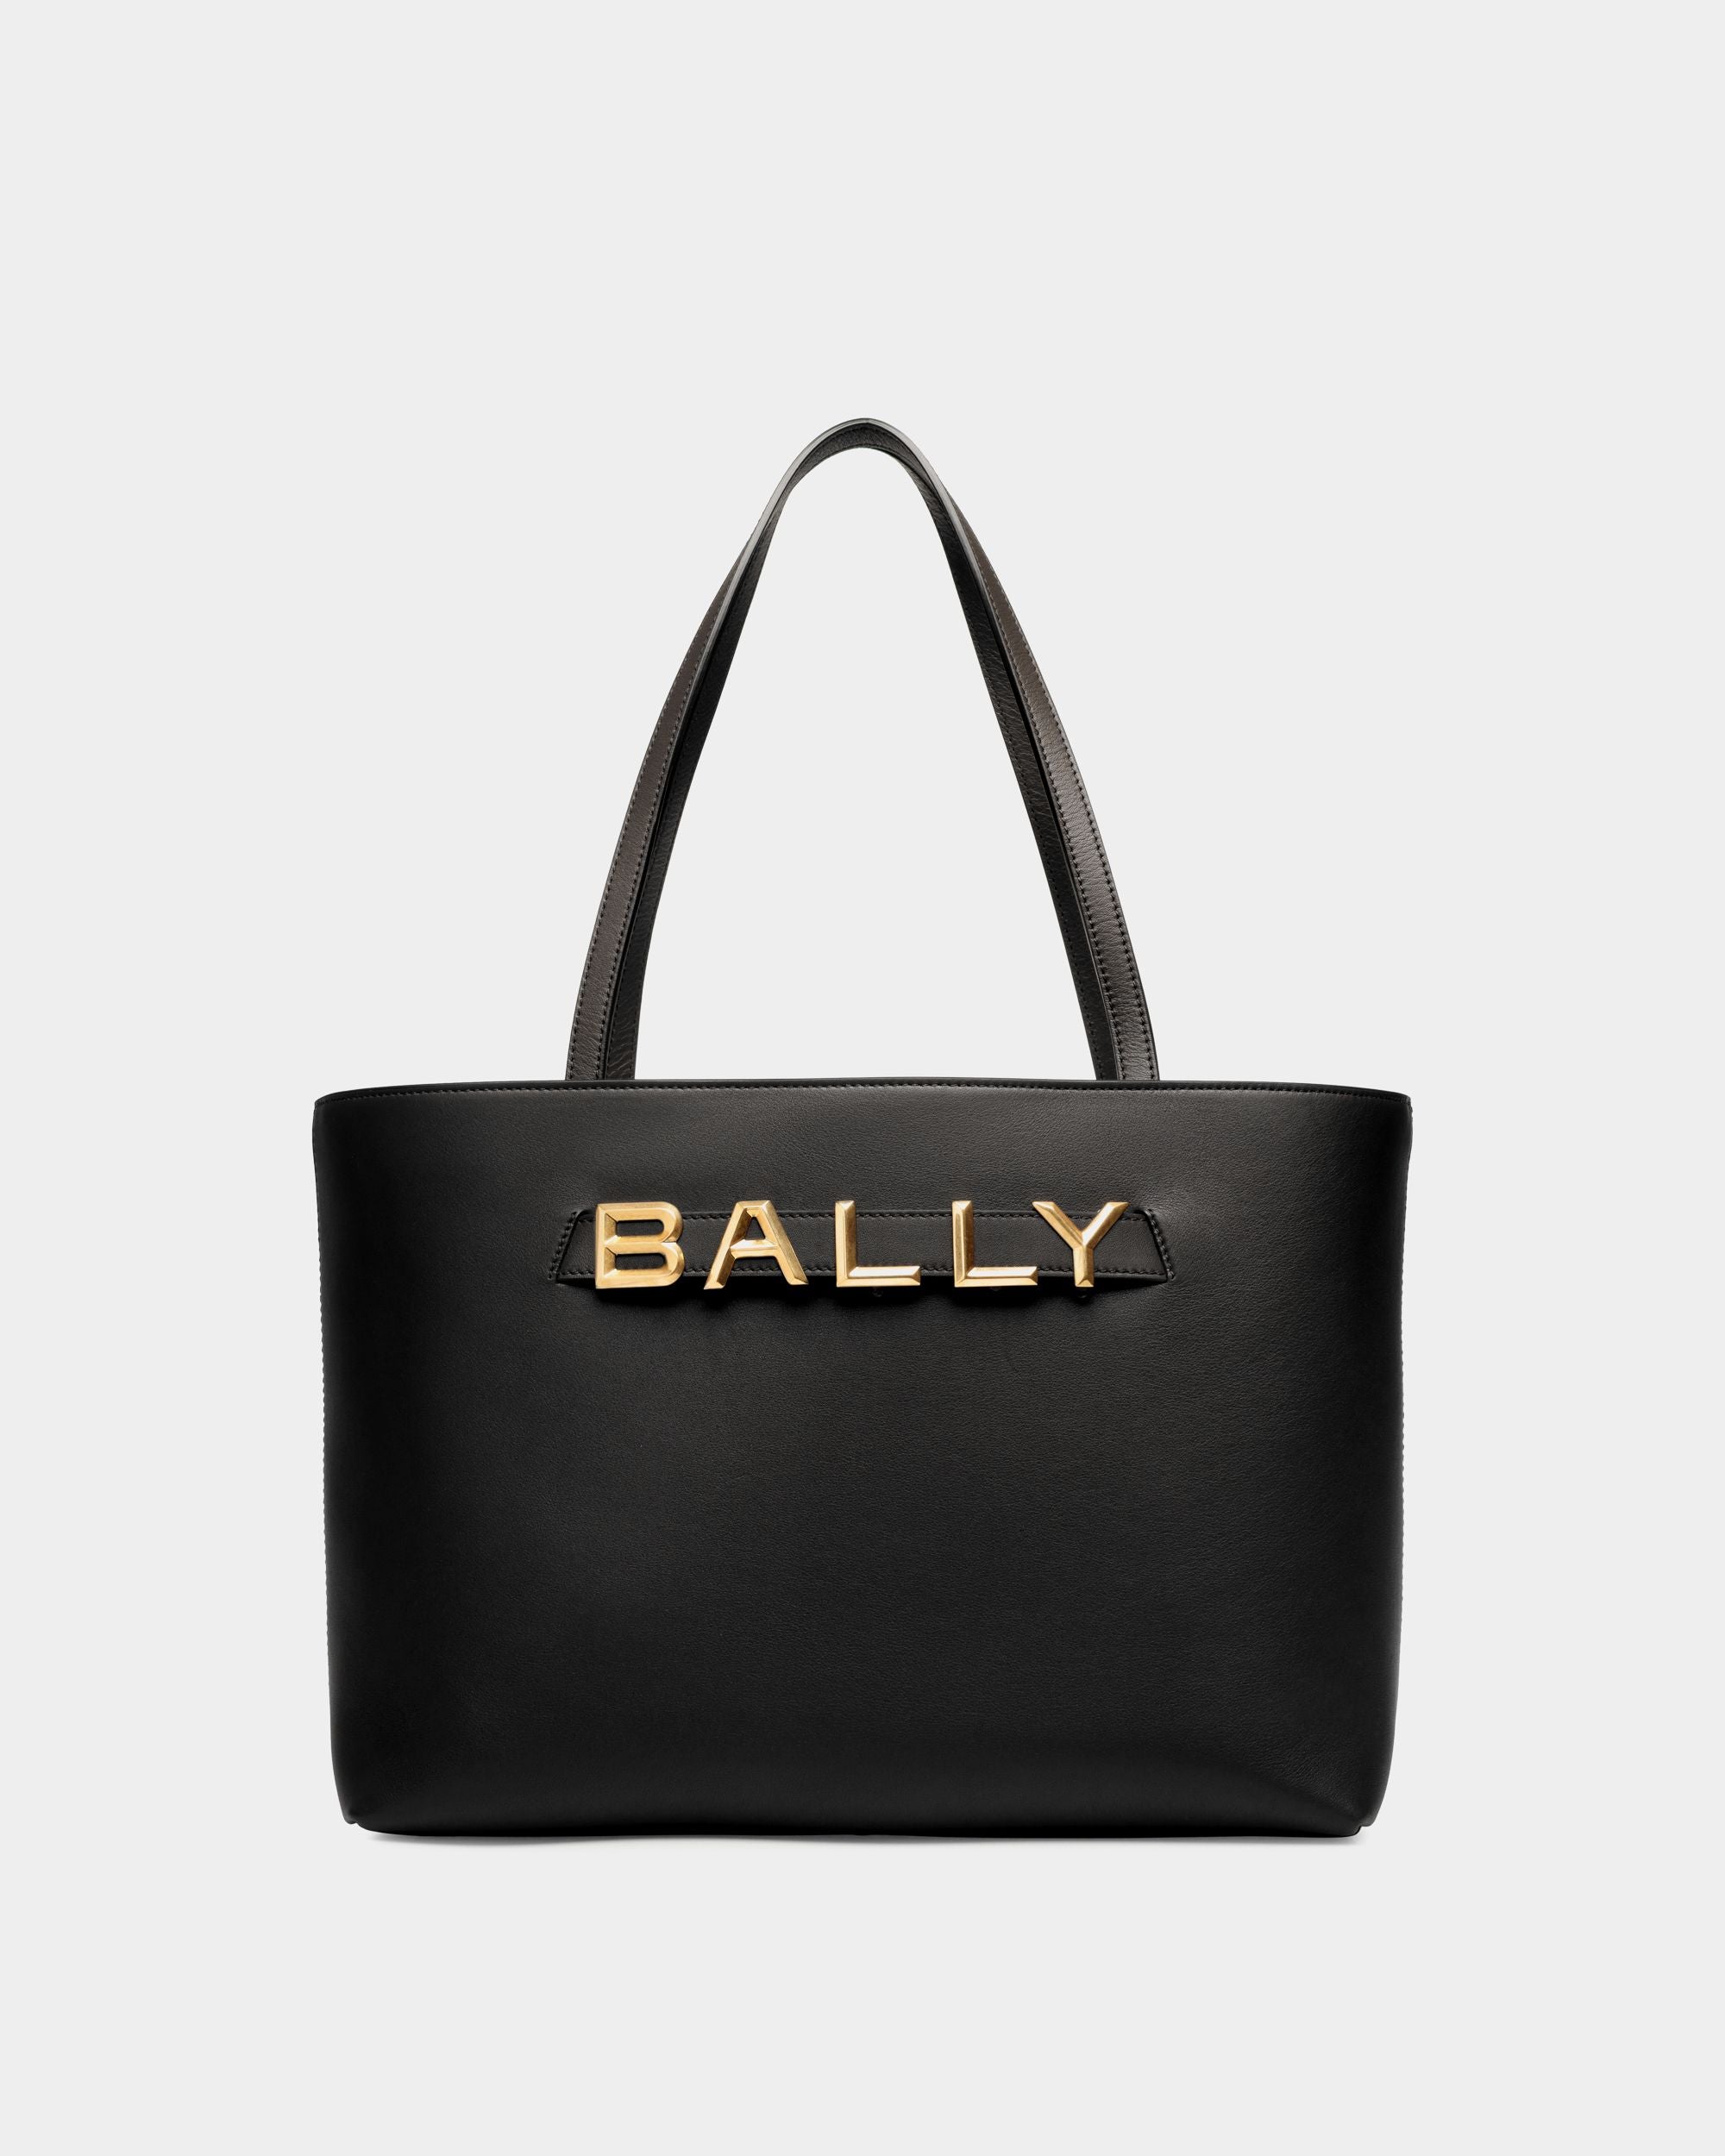 Bally Spell | Tote bag da donna in pelle nera | Bally | Still Life Fronte